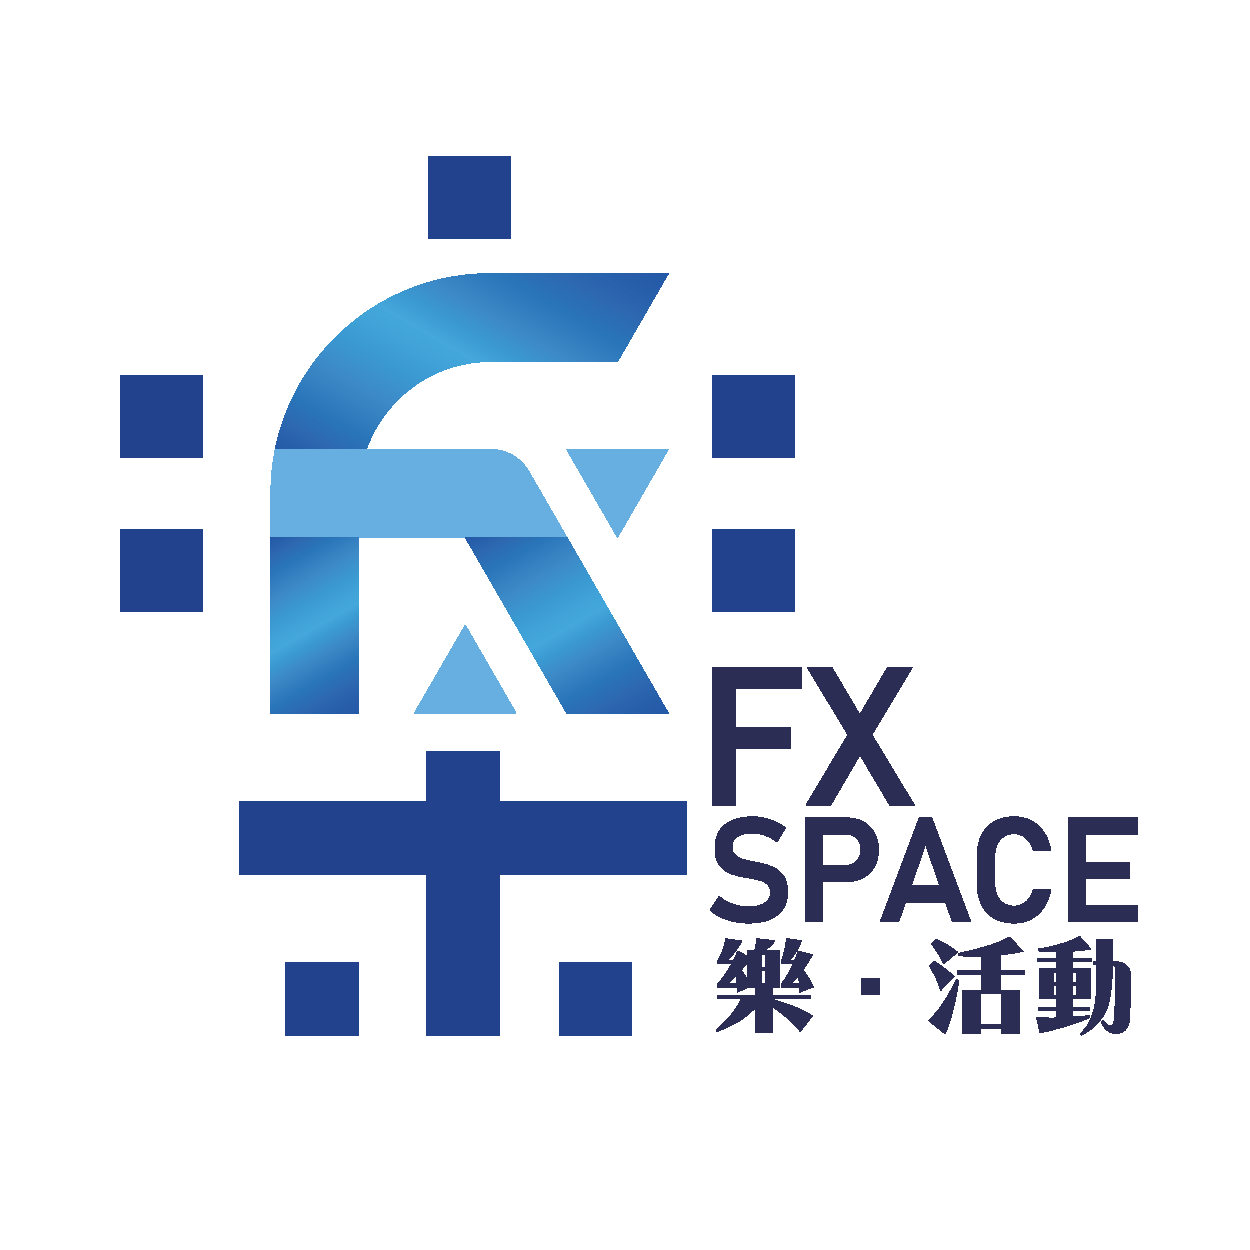 FX SPACE 樂．活動